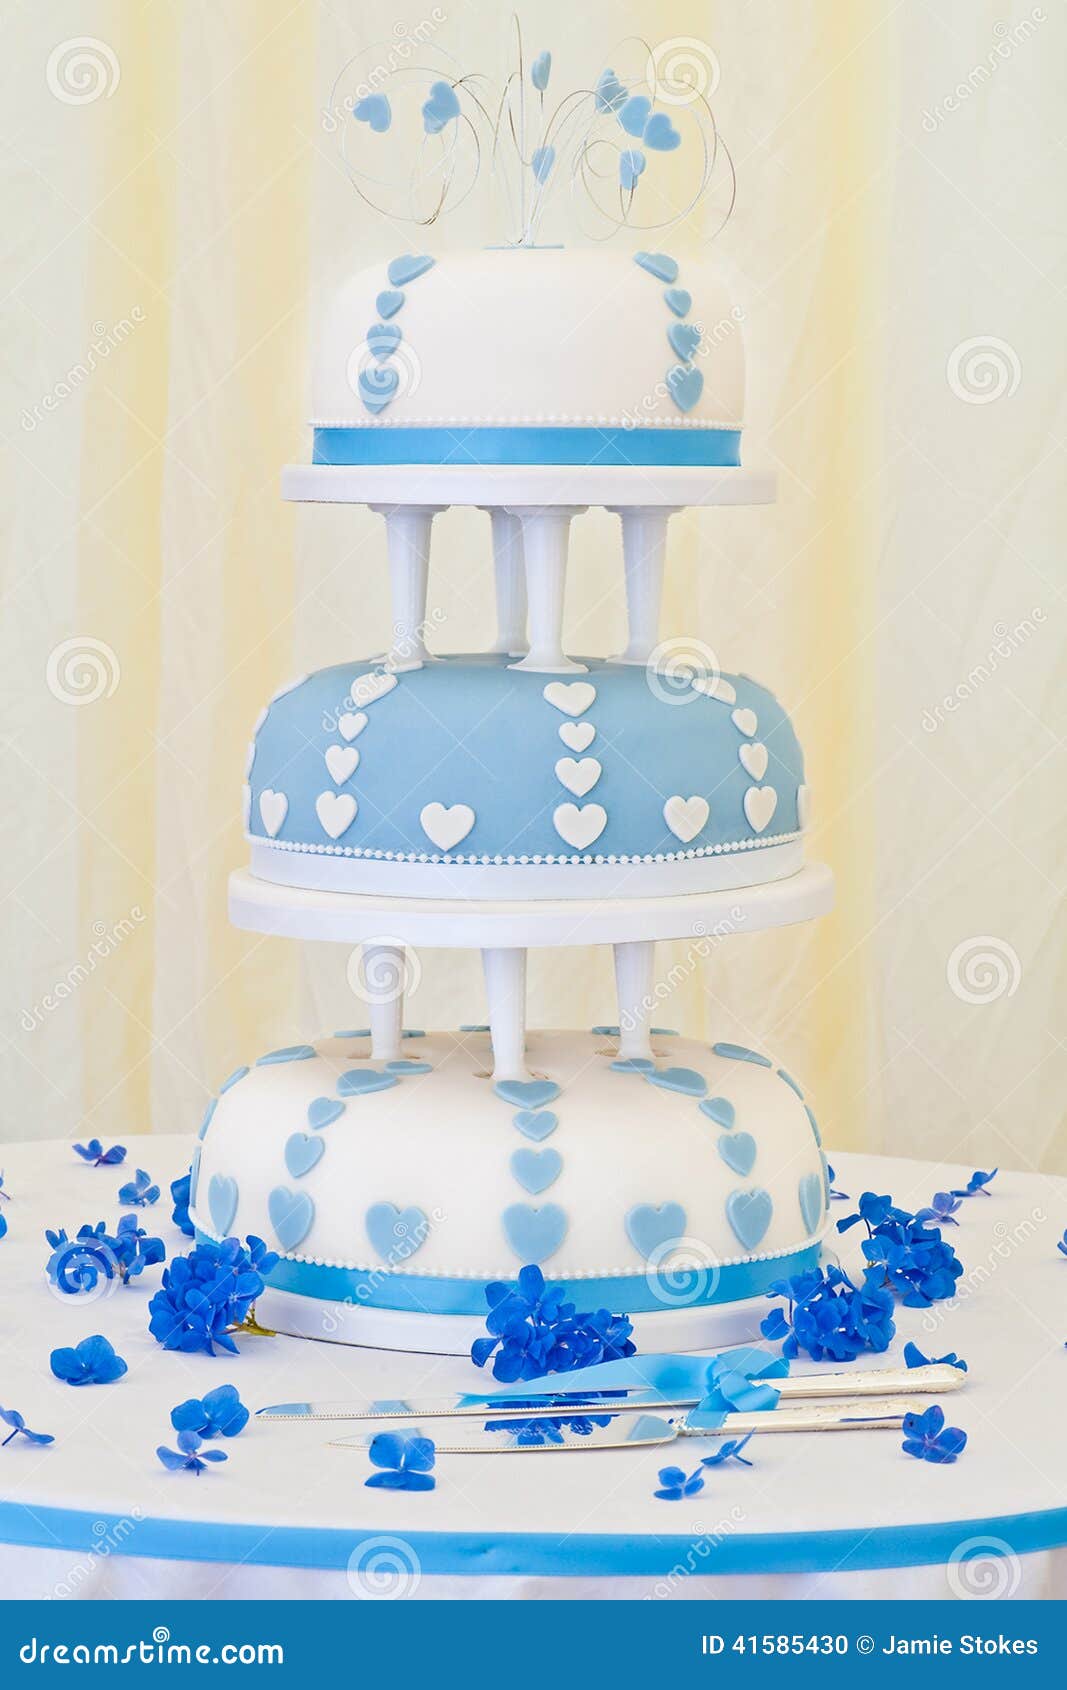 Two-Tier Wedding Reception Cake | Thanku Foods